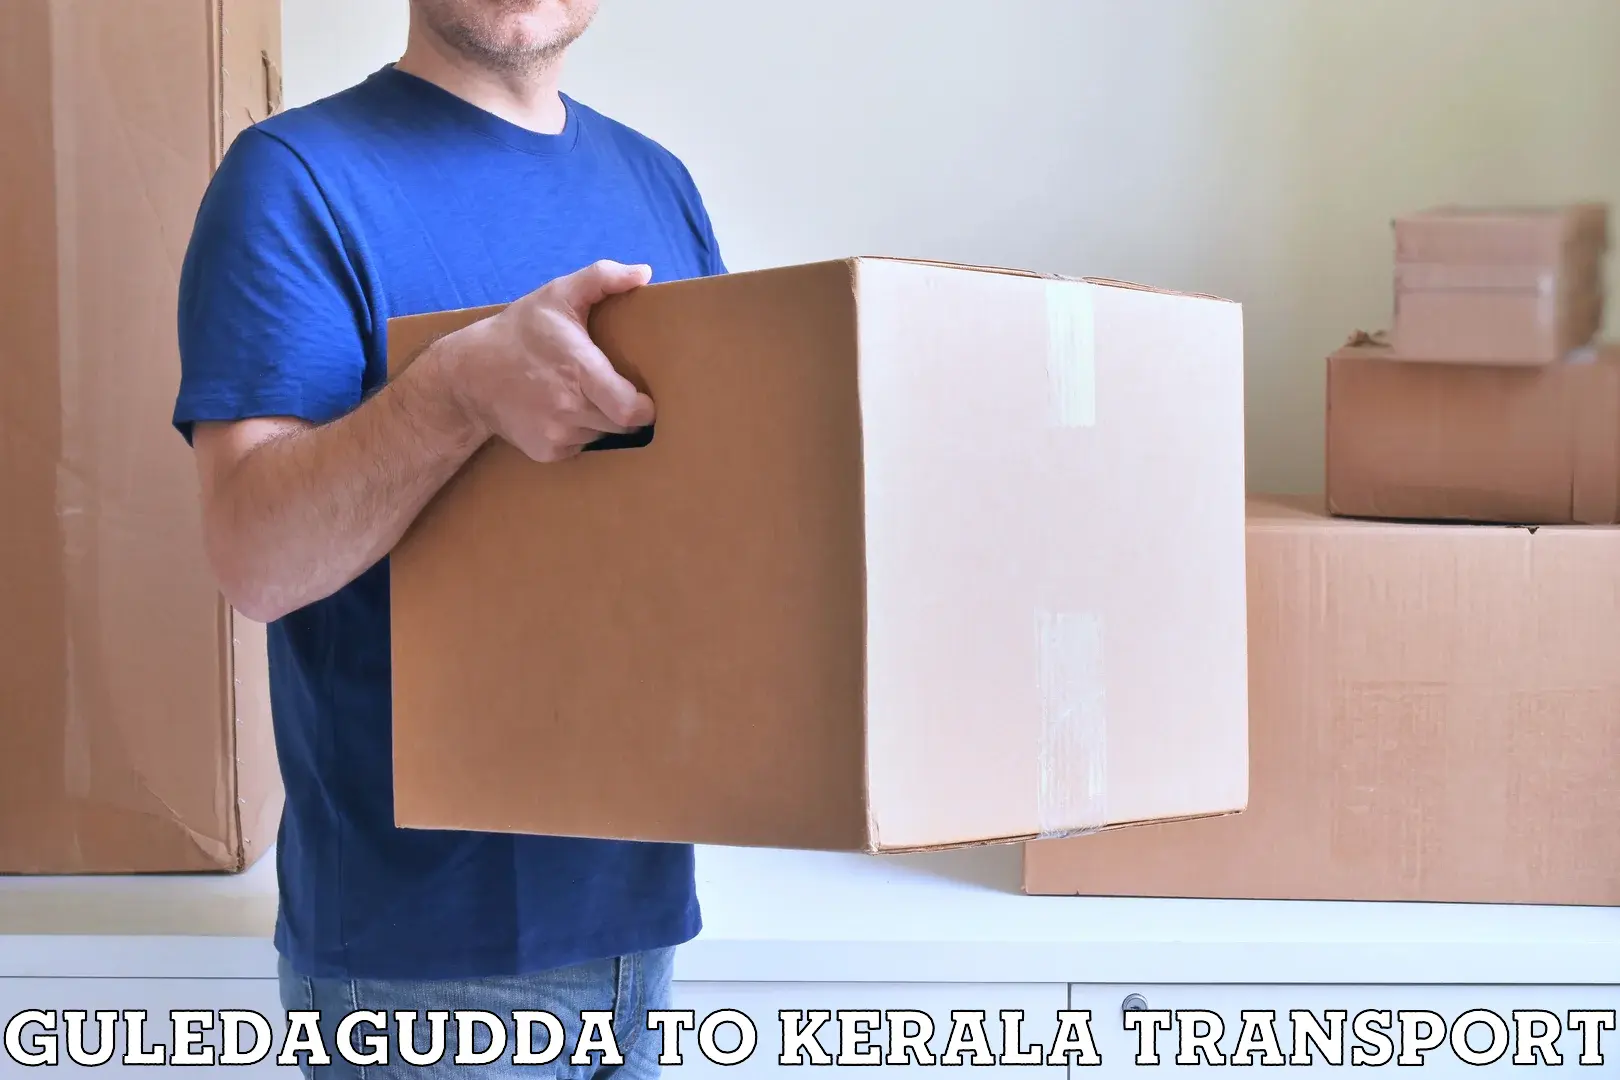 Vehicle transport services Guledagudda to Kottayam